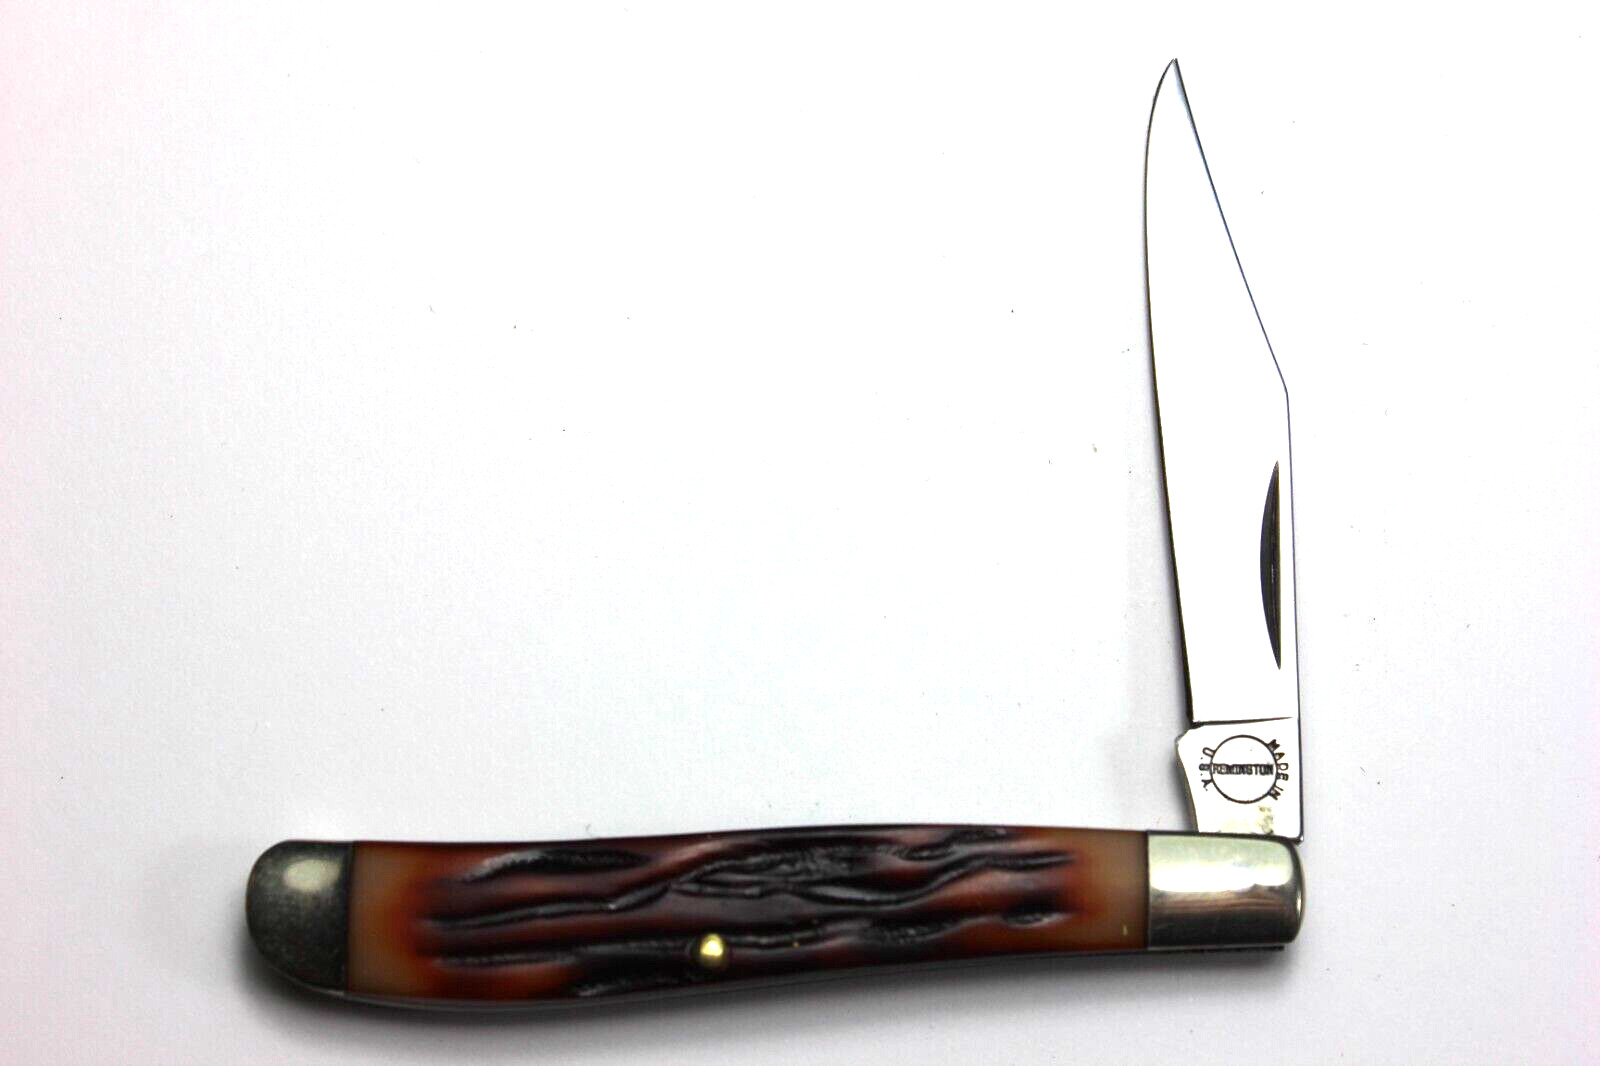 Remington Single Blade Folding Pocket & Purse Knife - MINT Condition